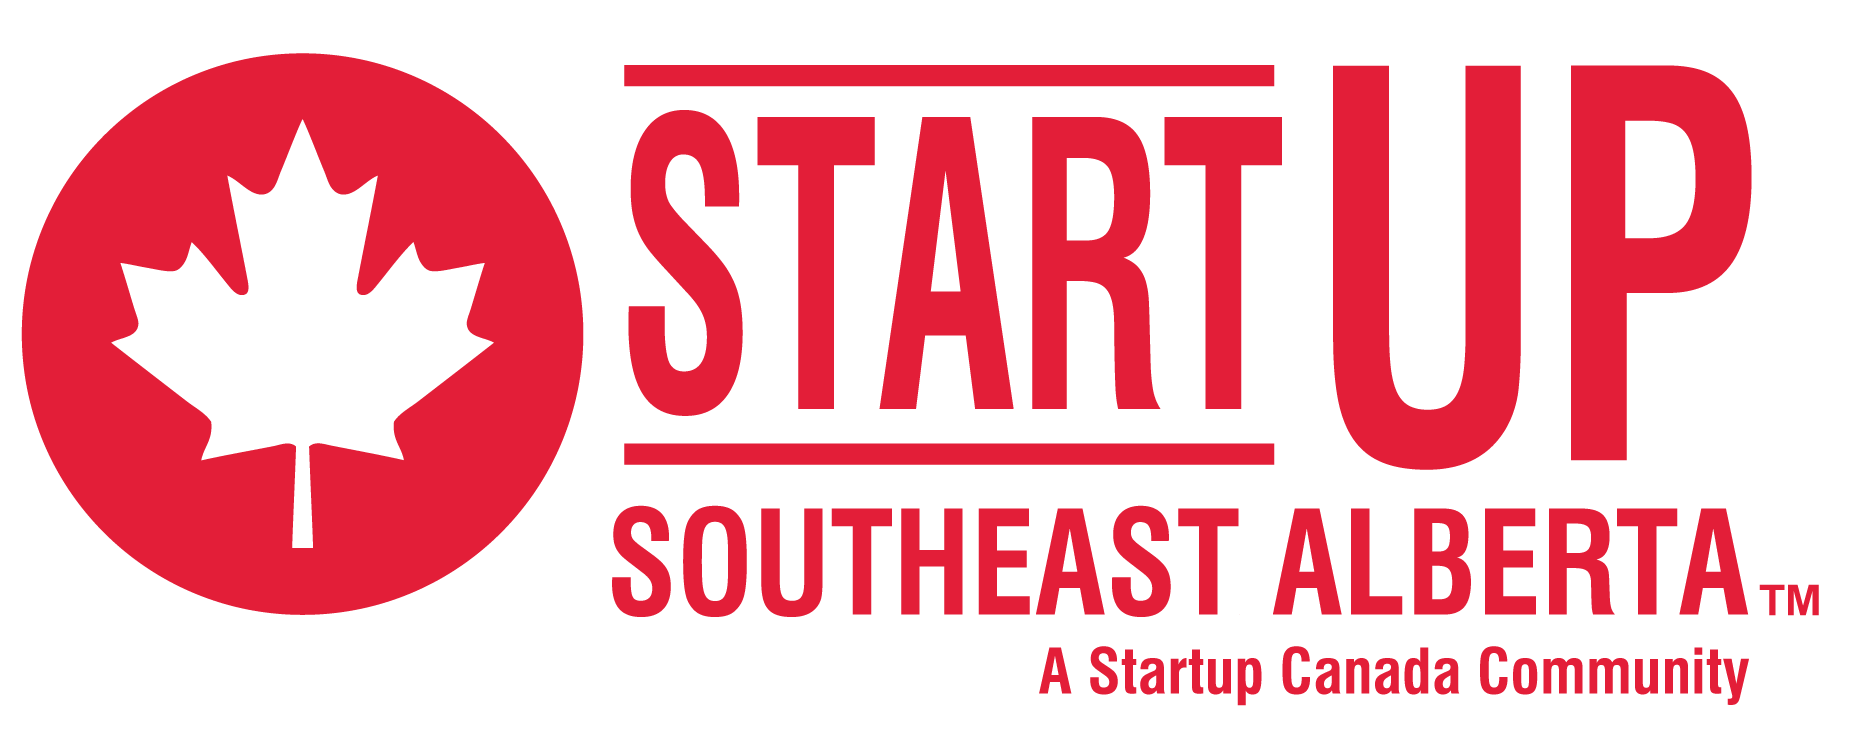 Startup_Southeast Alberta_Red